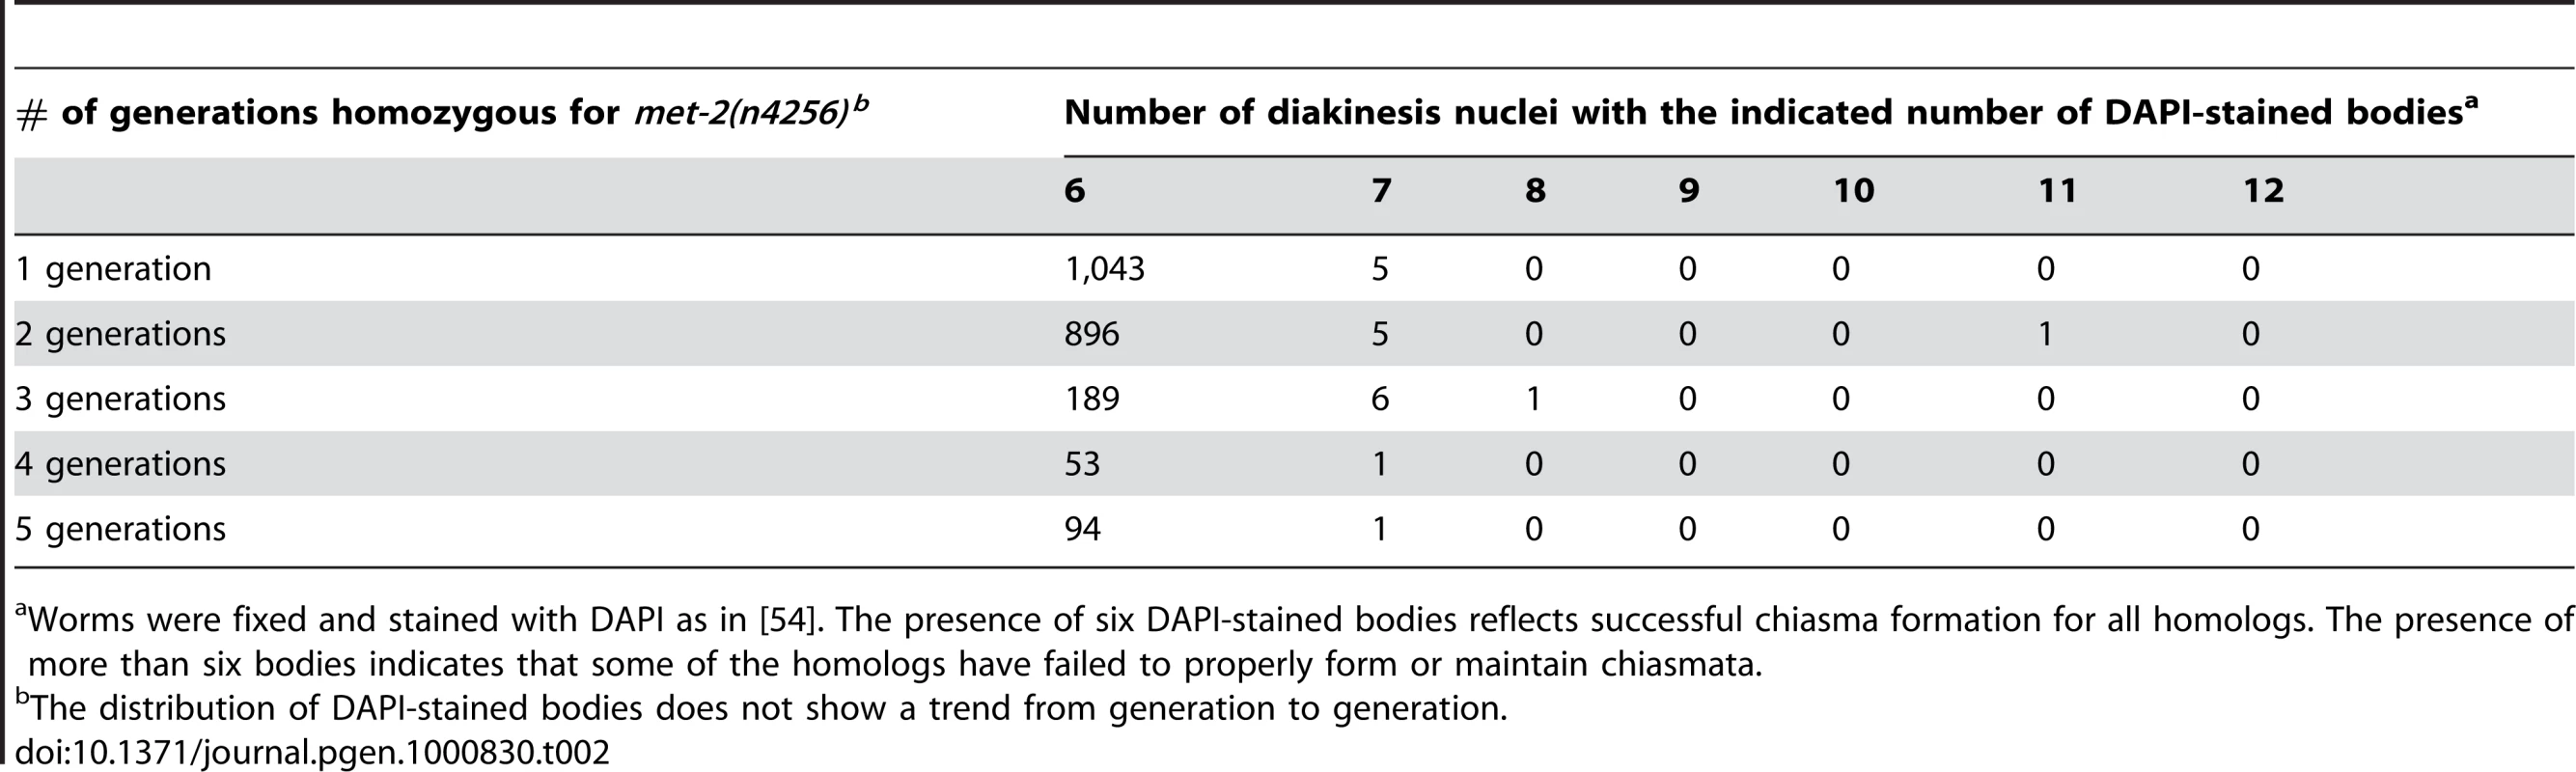 Karyotype analysis of diakinesis-stage oocytes.